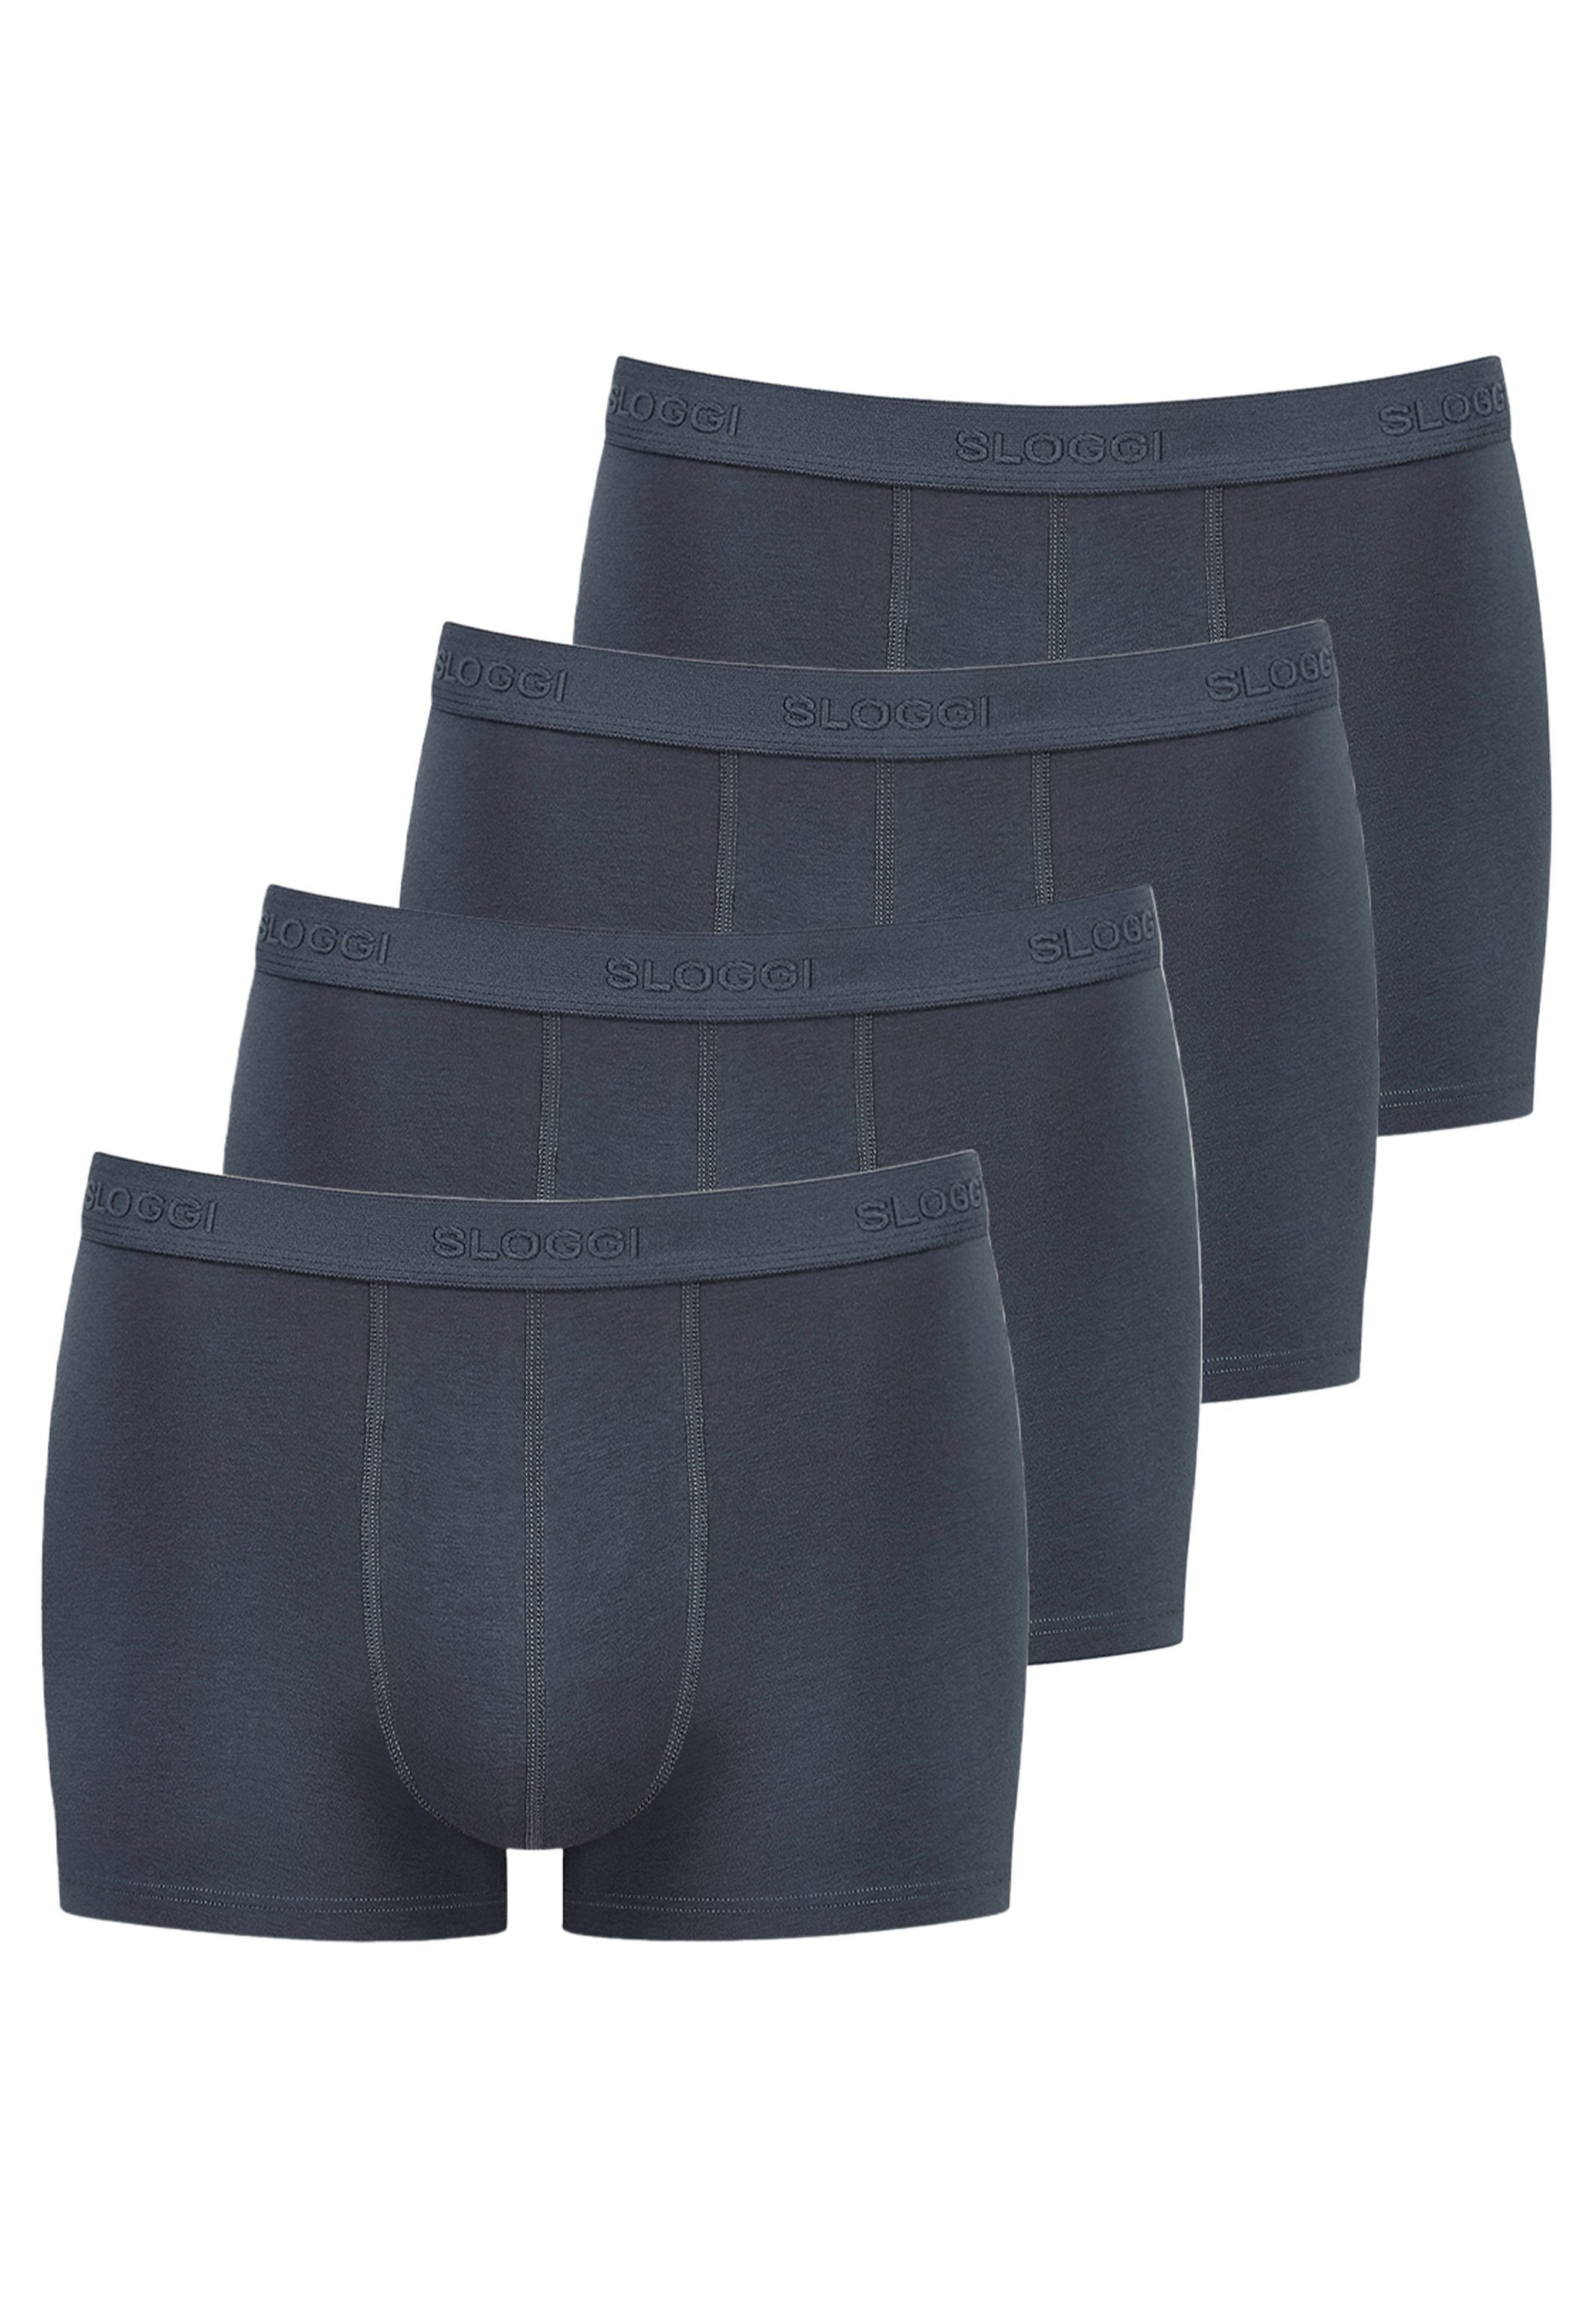 Retro Pant Stormy Sloggi Eingriff 24/7 - Ohne / Grey 4-St) Short Baumwolle - Long (Spar-Set, Boxer 4er - Pack